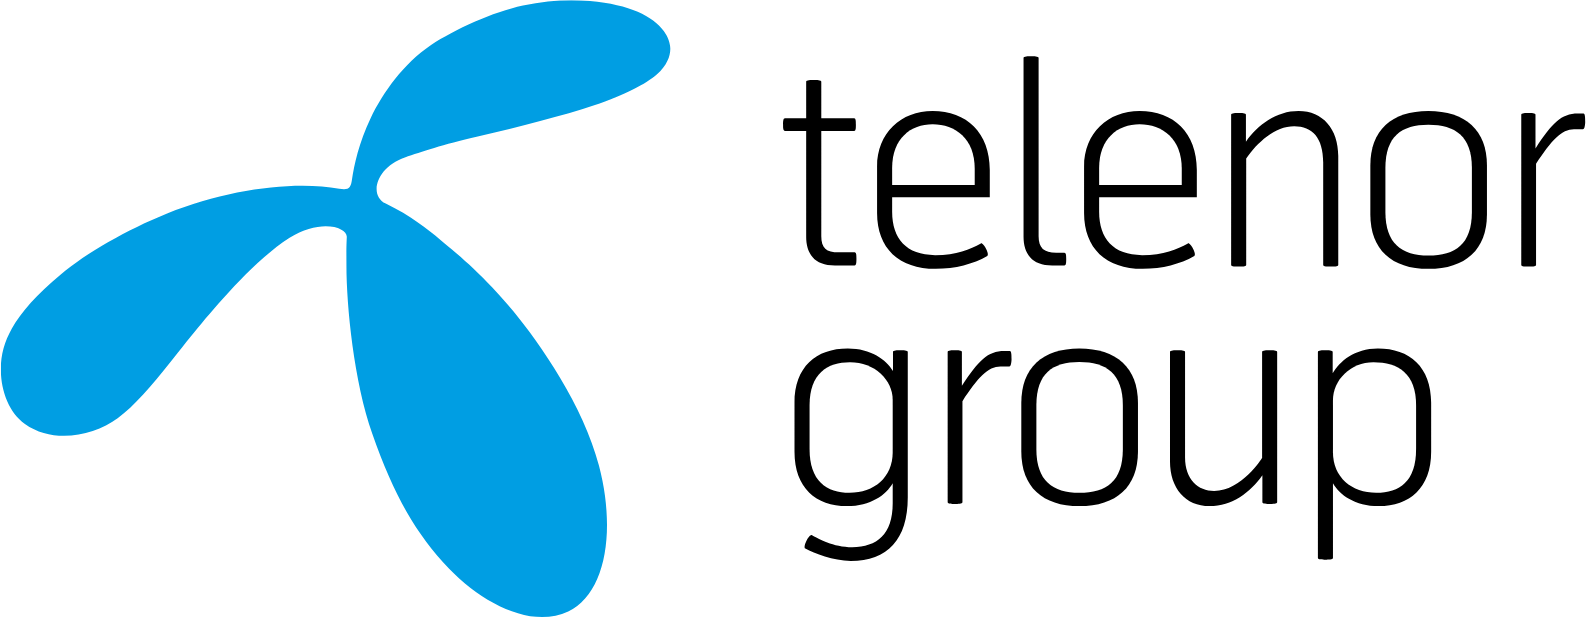 Telenor logo large (transparent PNG)